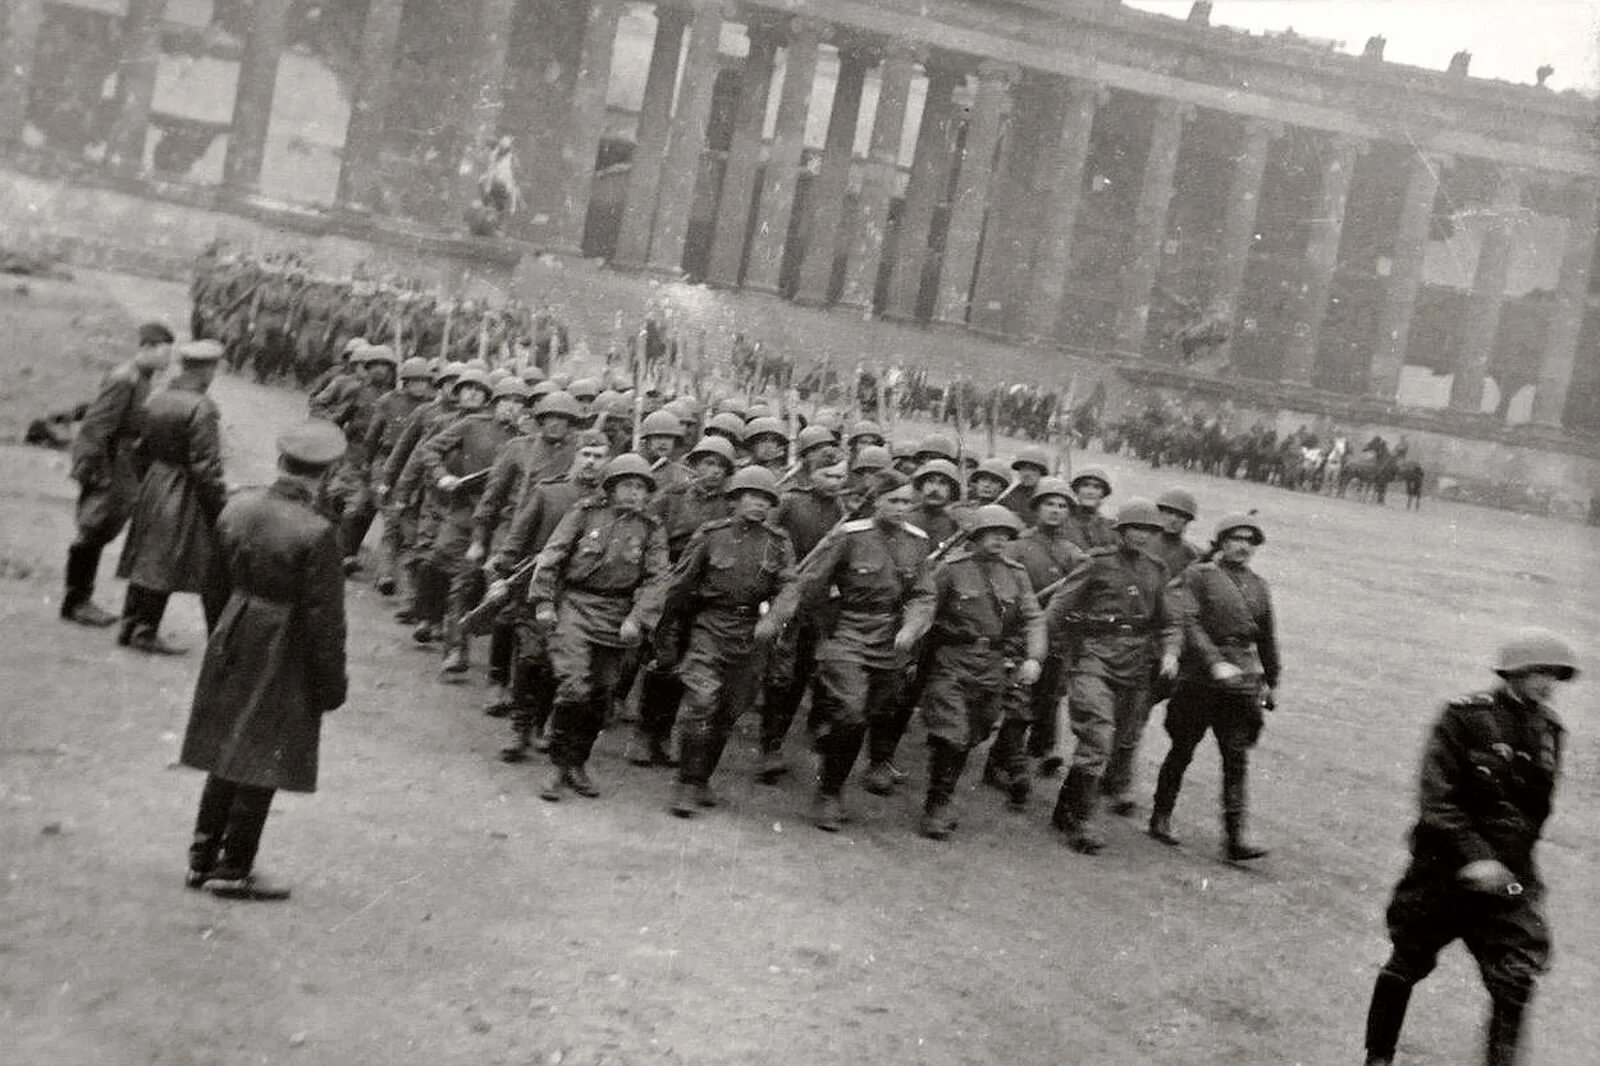 Парад советских солдат в Берлине 1945. Советские солдаты в Берлине 1945 года. Парад Победы в Берлине 4 мая 1945 года. Советская армия в Берлине 1945. Берлин 5 мая 1945